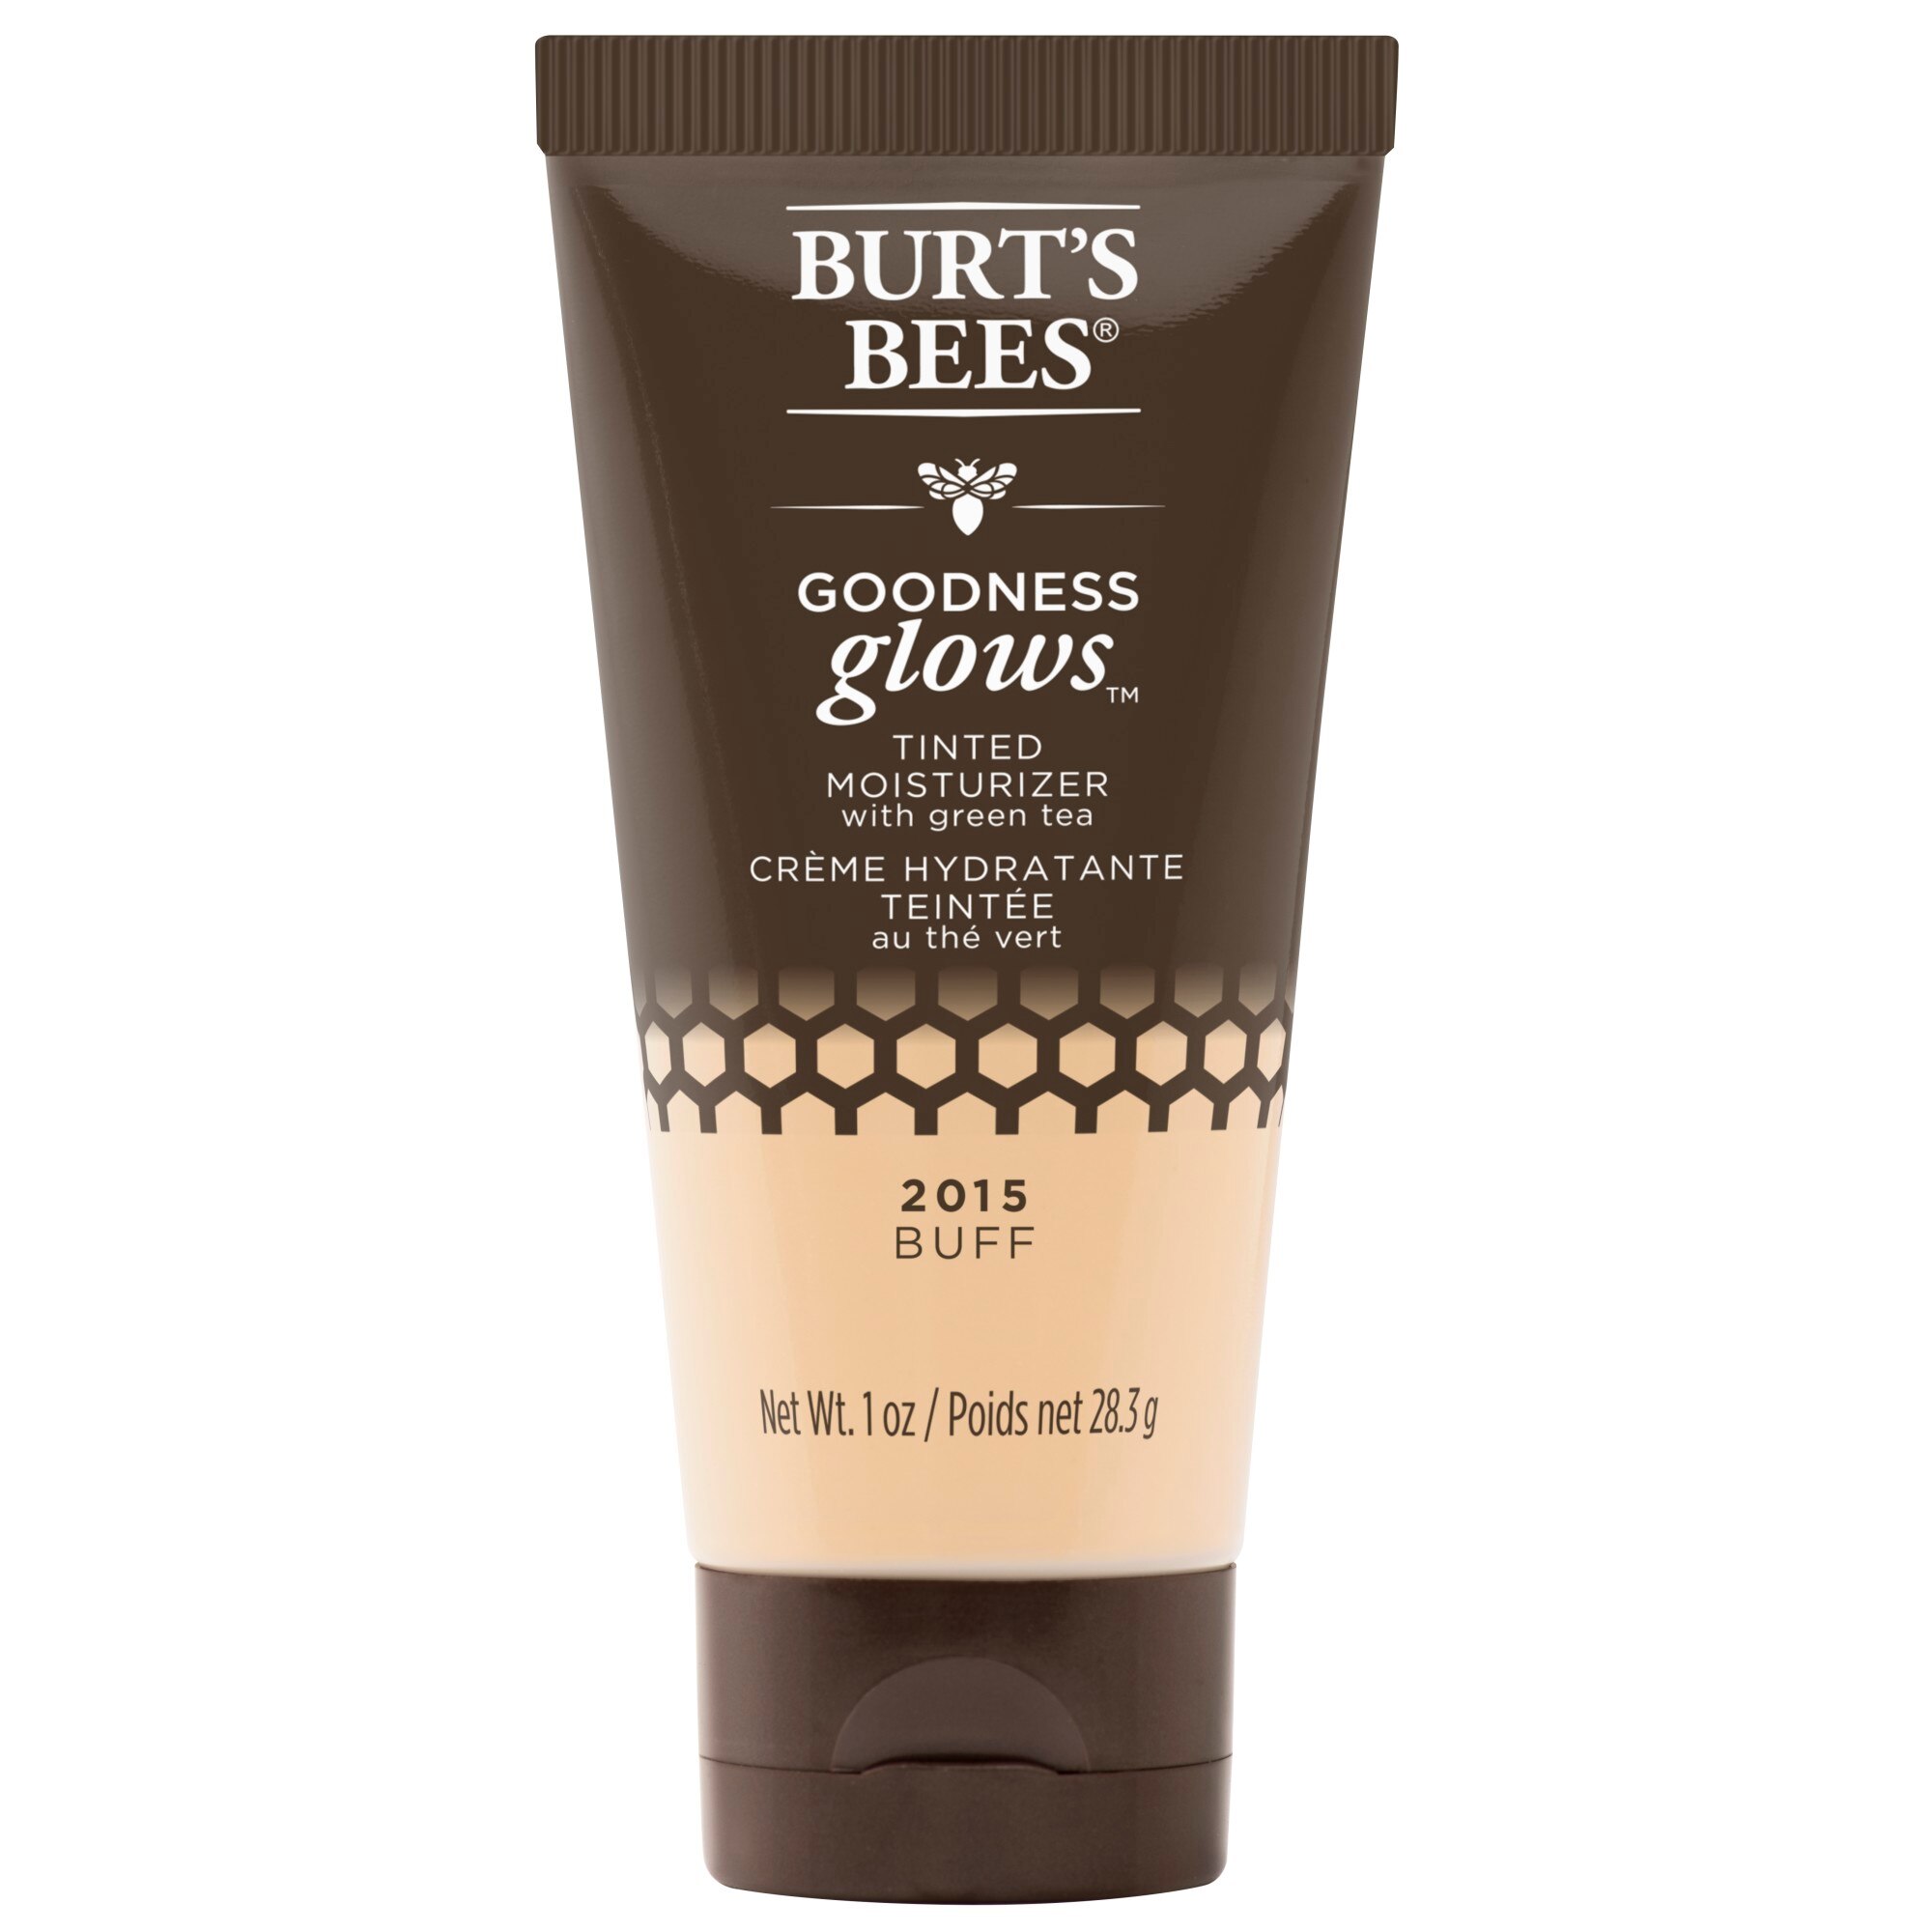 Burt's Bees Goodness Glows Tinted Moisturizer, Rich In Antioxidants, Buff - 1 Oz , CVS